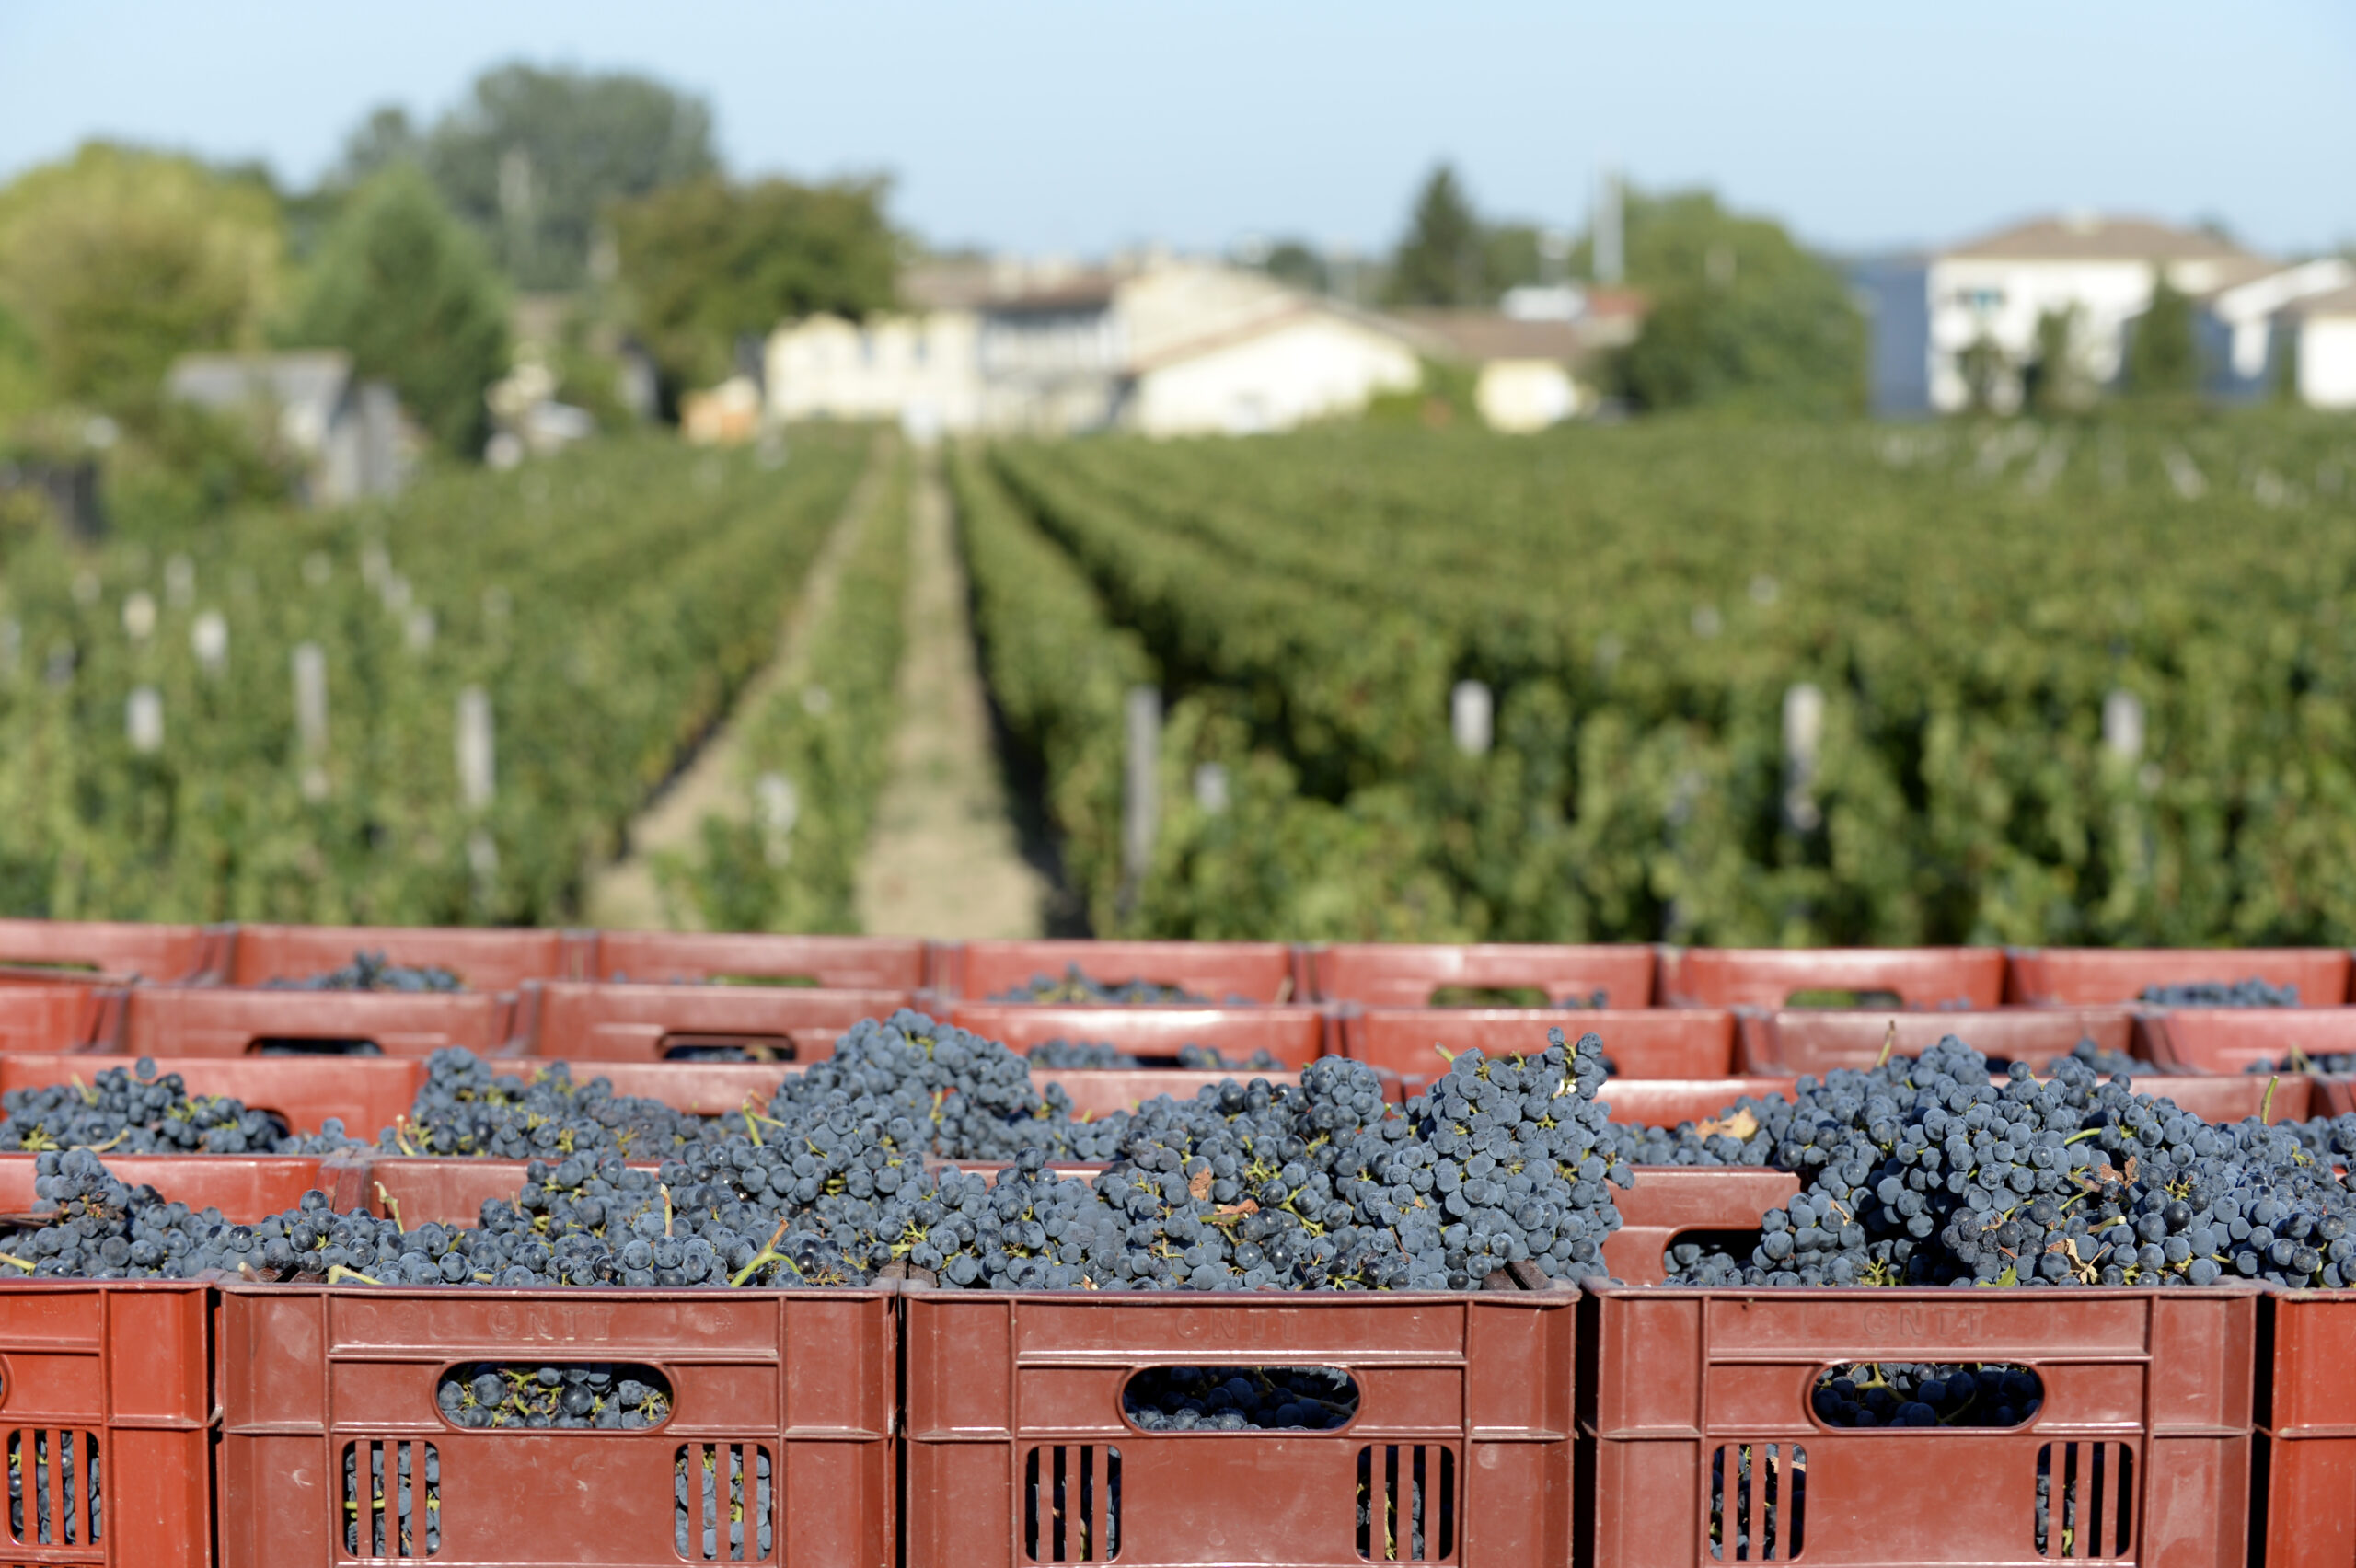 grapes in bins in a vineyard